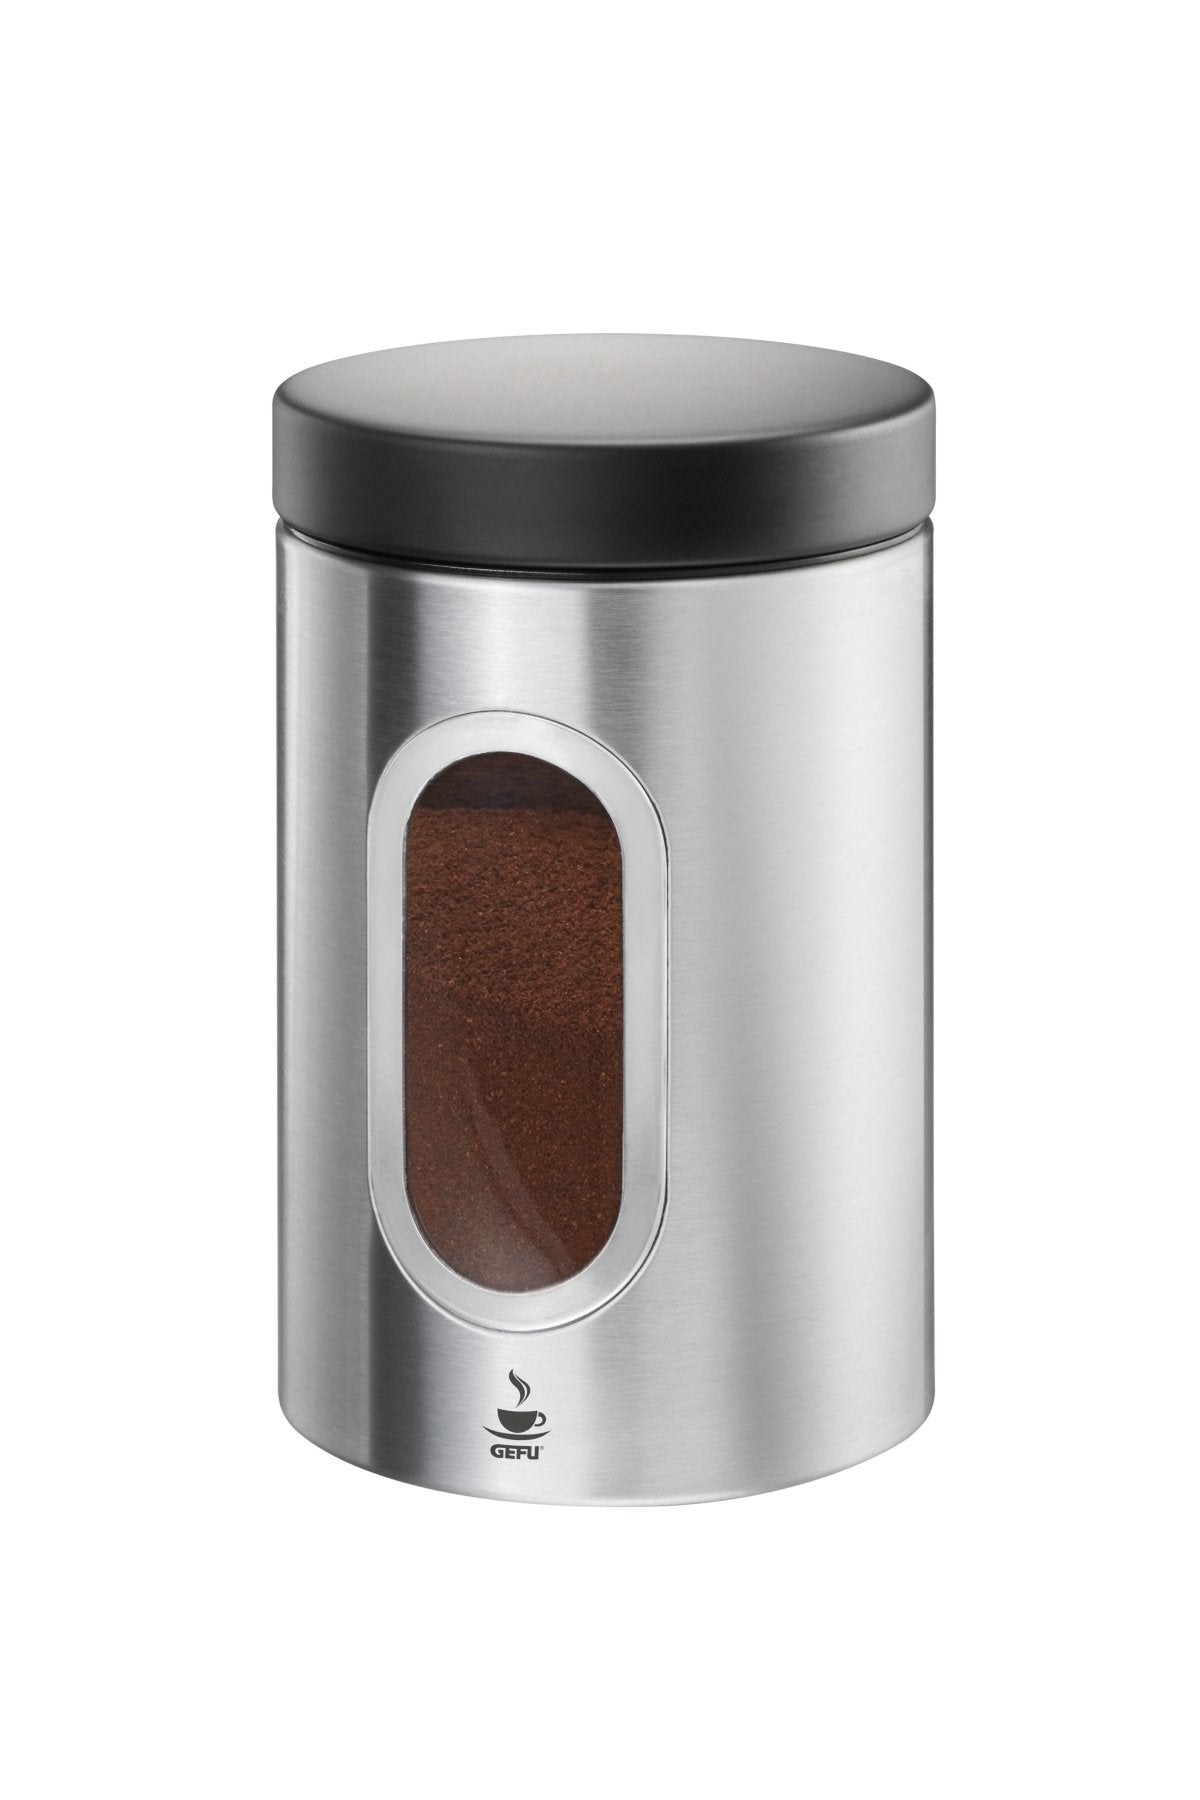 GEFU Coffee Tin, 500G - Whole and All